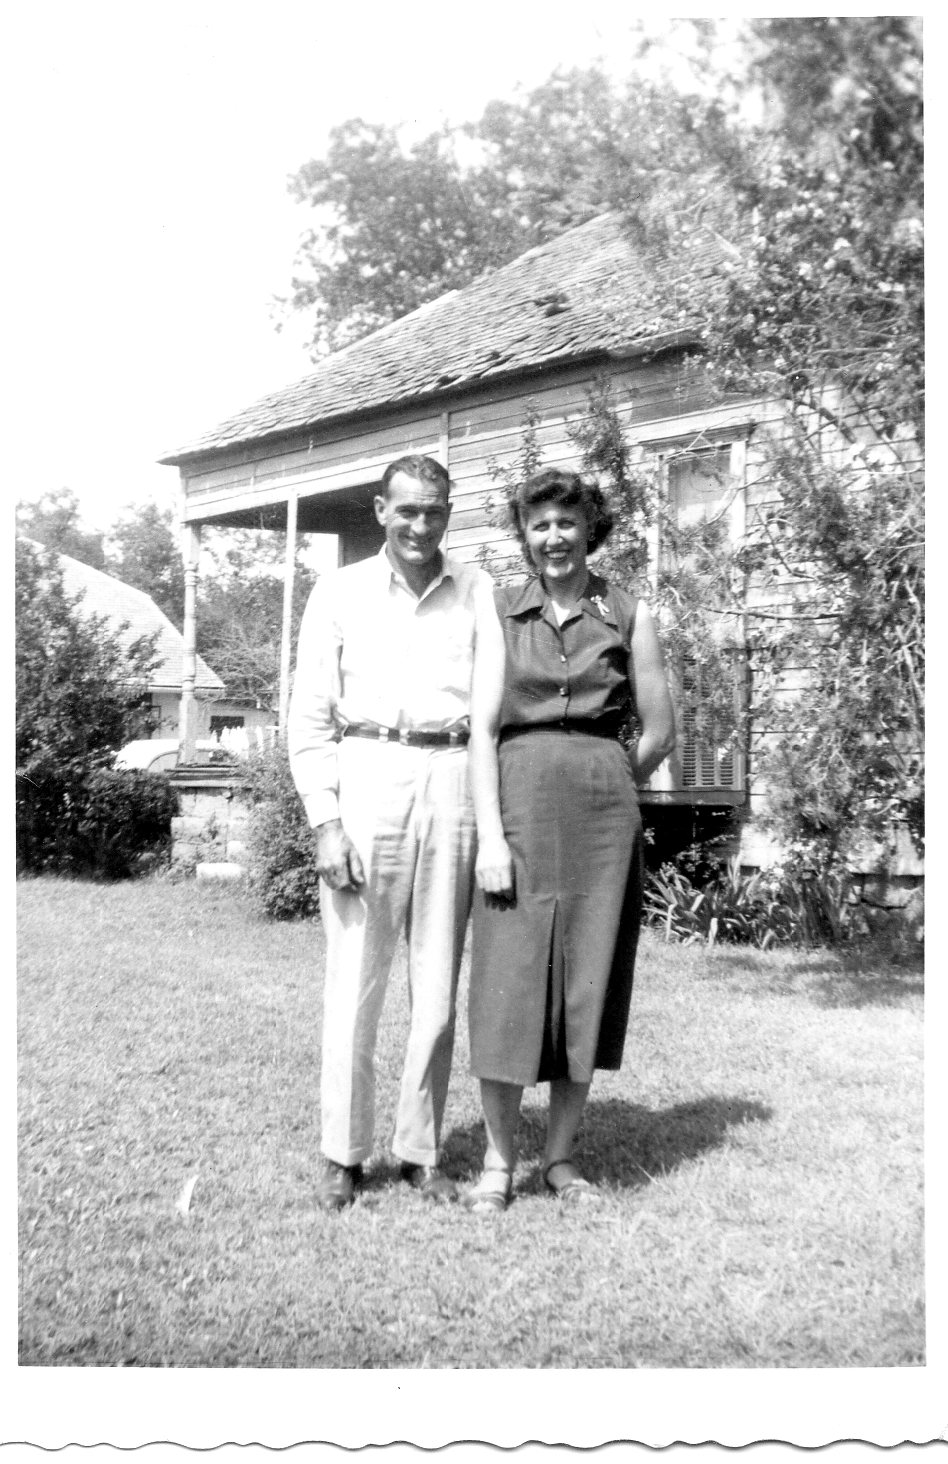 Grandma and grandpa with old fashioned living. #TexasHomesteader